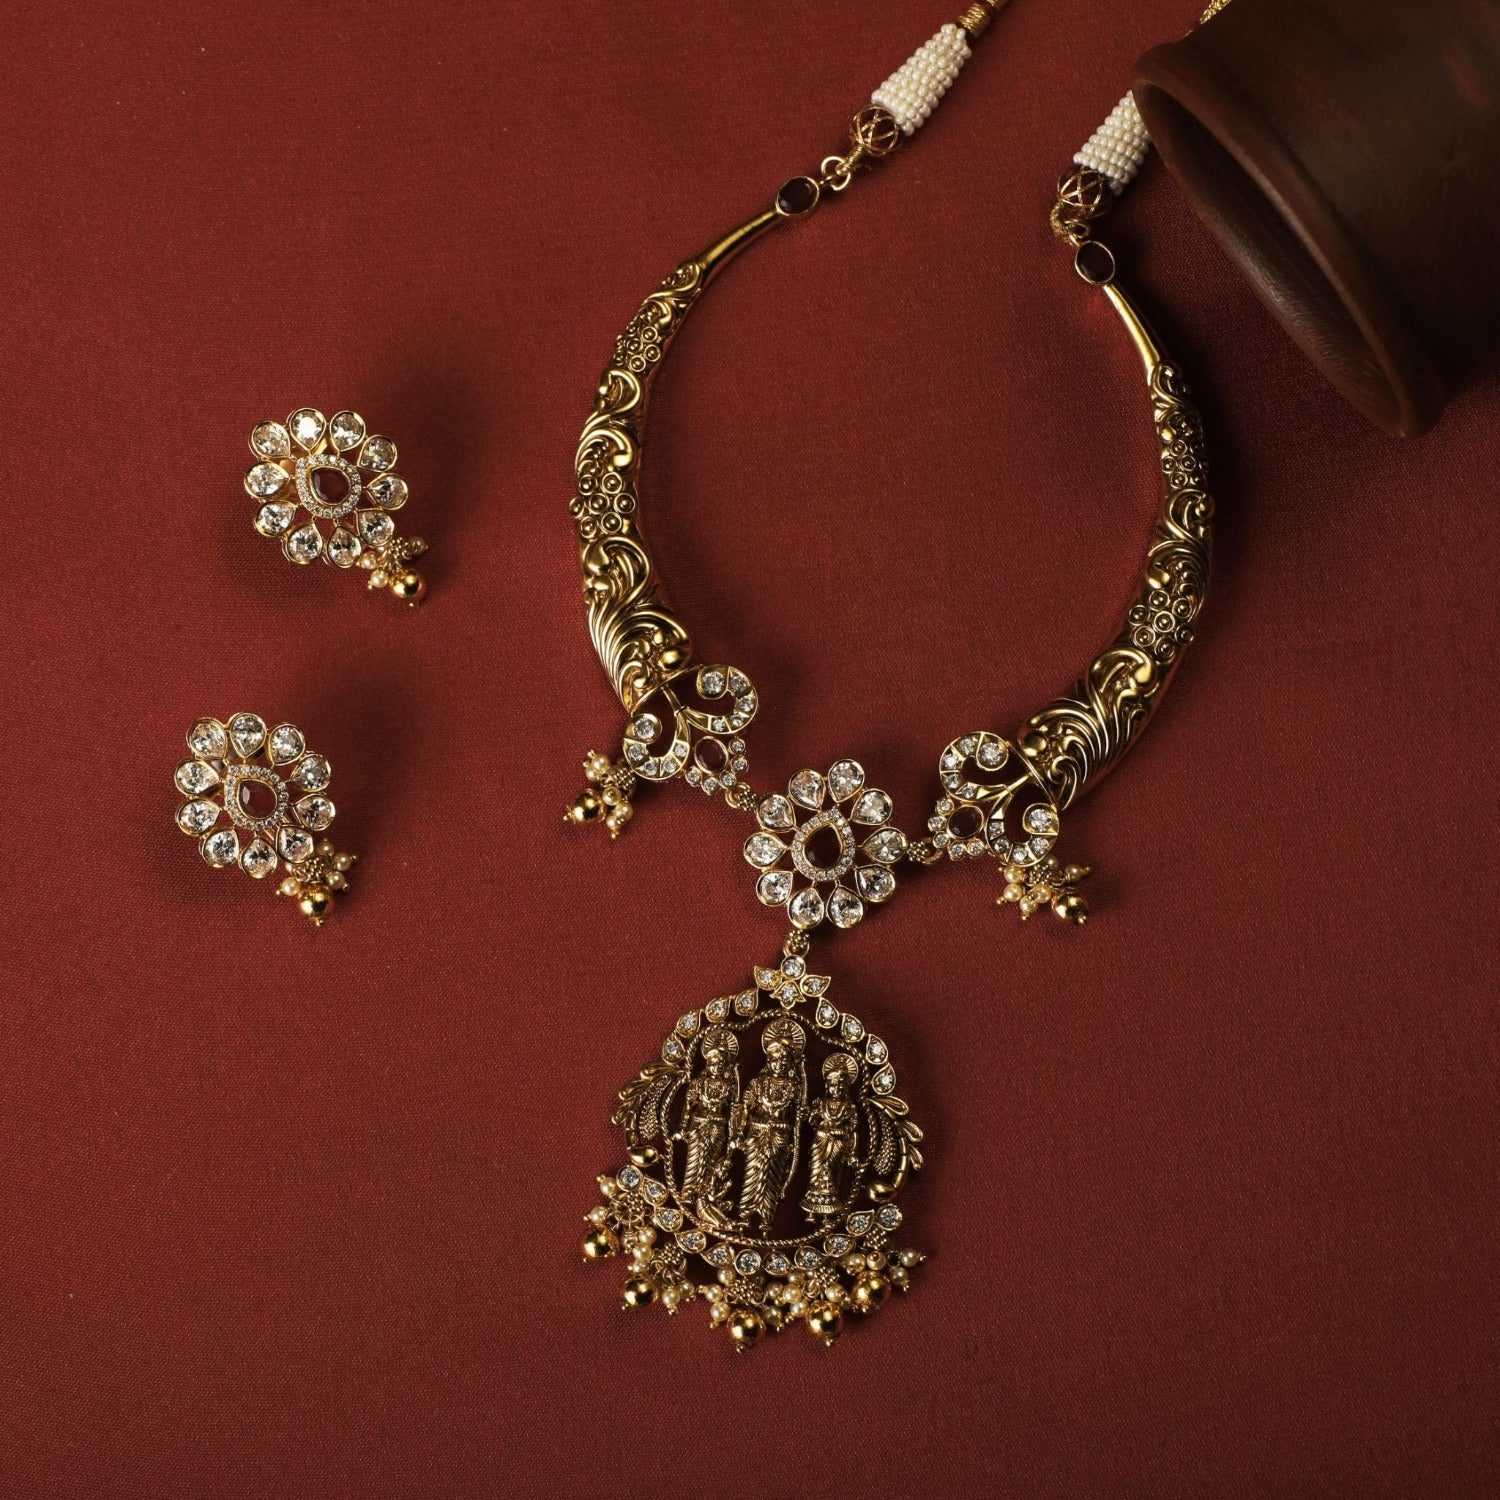 Ramparivar necklace big kasu with stud earrings - Swarnakshi Jewelry